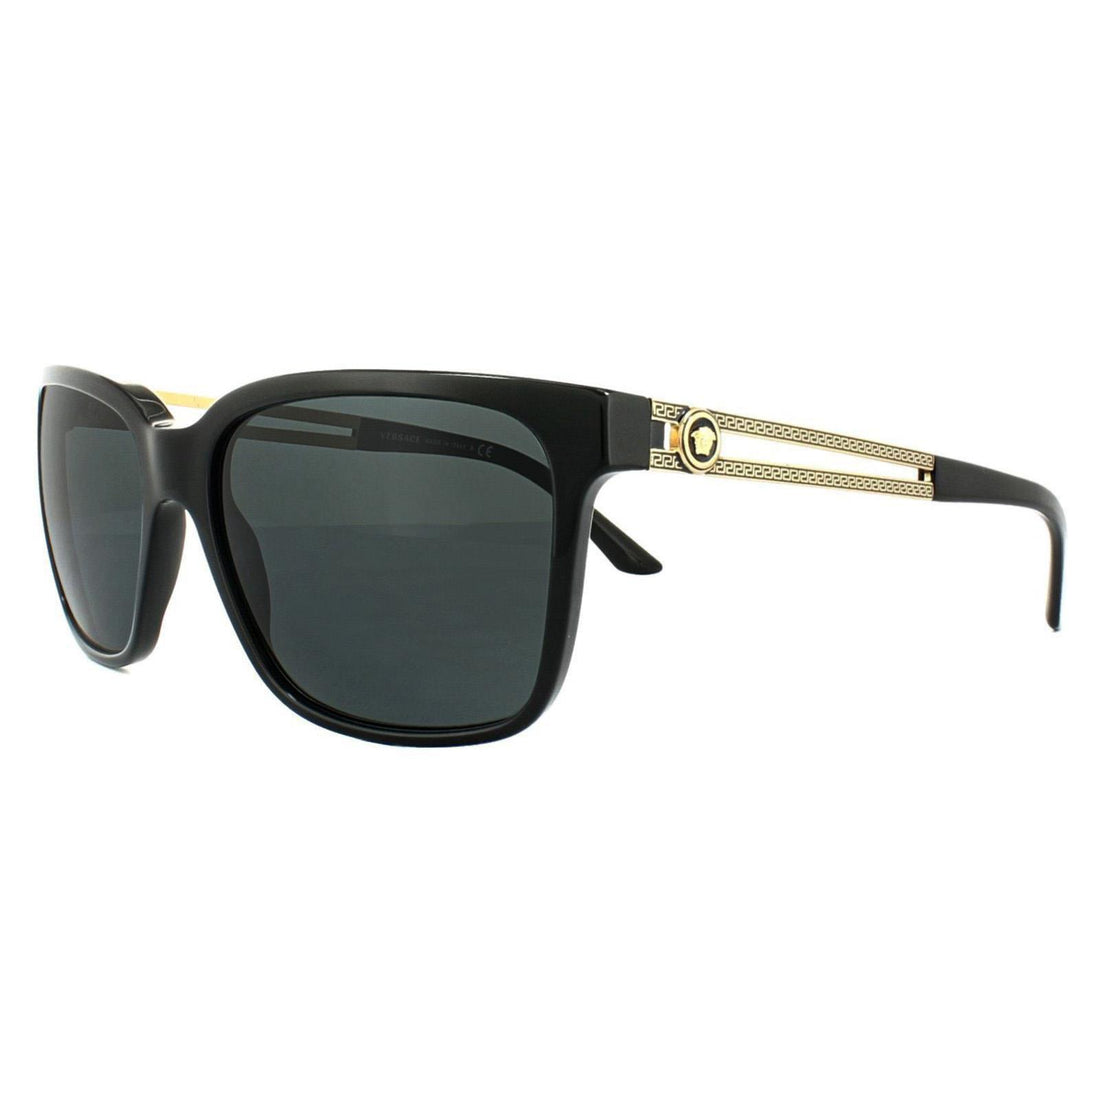 Versace Sunglasses 4307 GB1/87 Black Grey